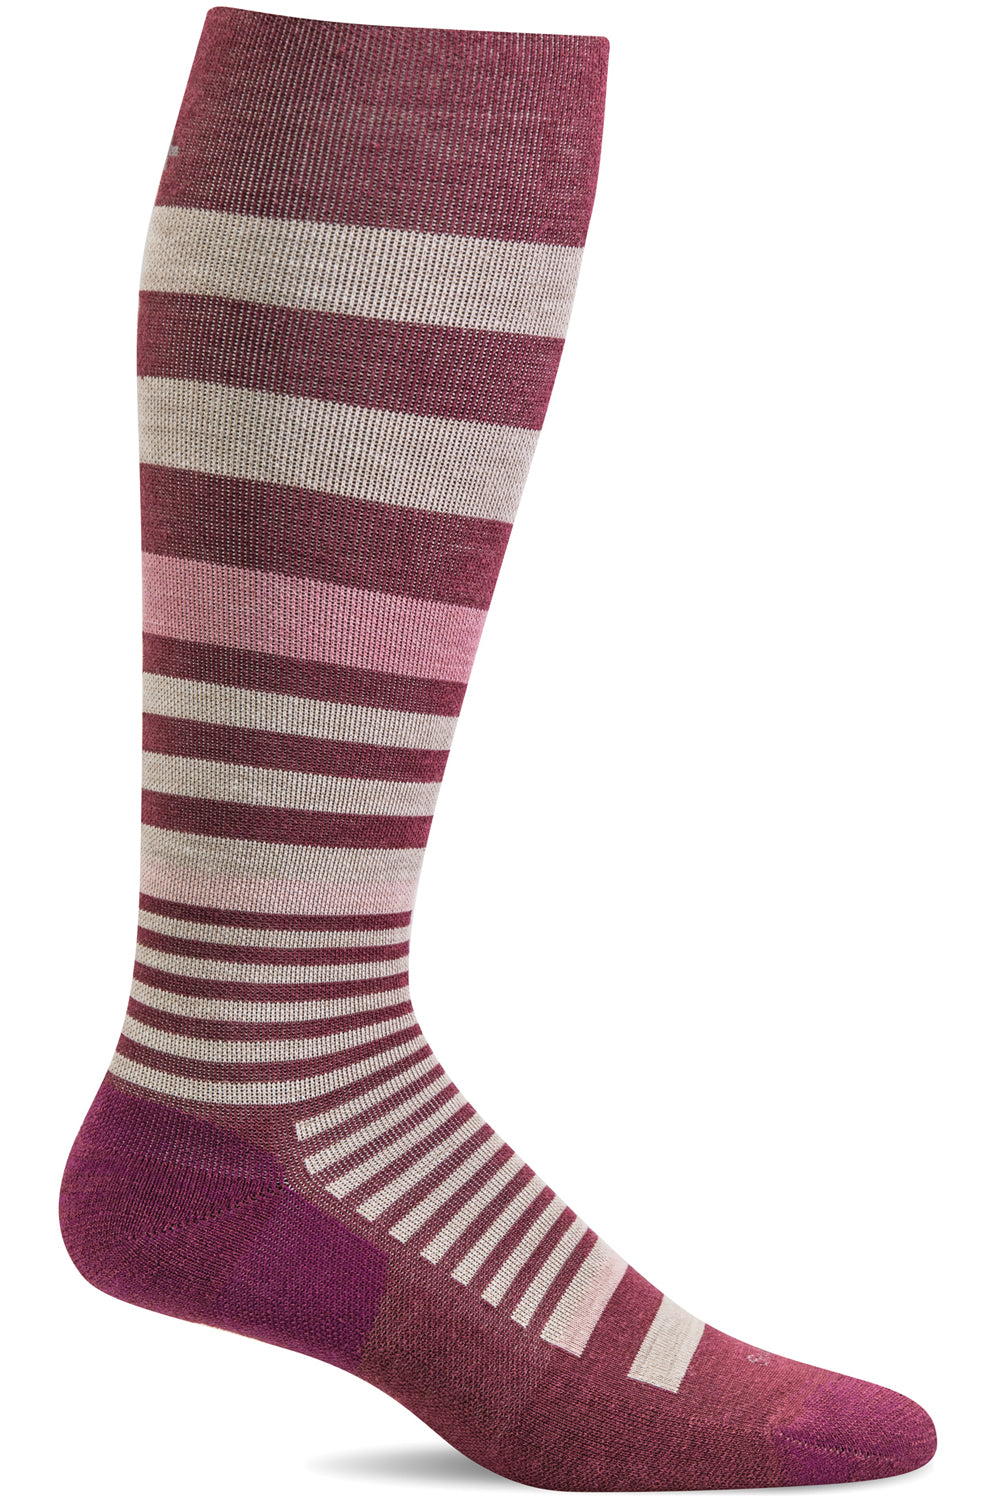 Sockwell Women's Orbital Stripe Sock in Mulberry color from the side